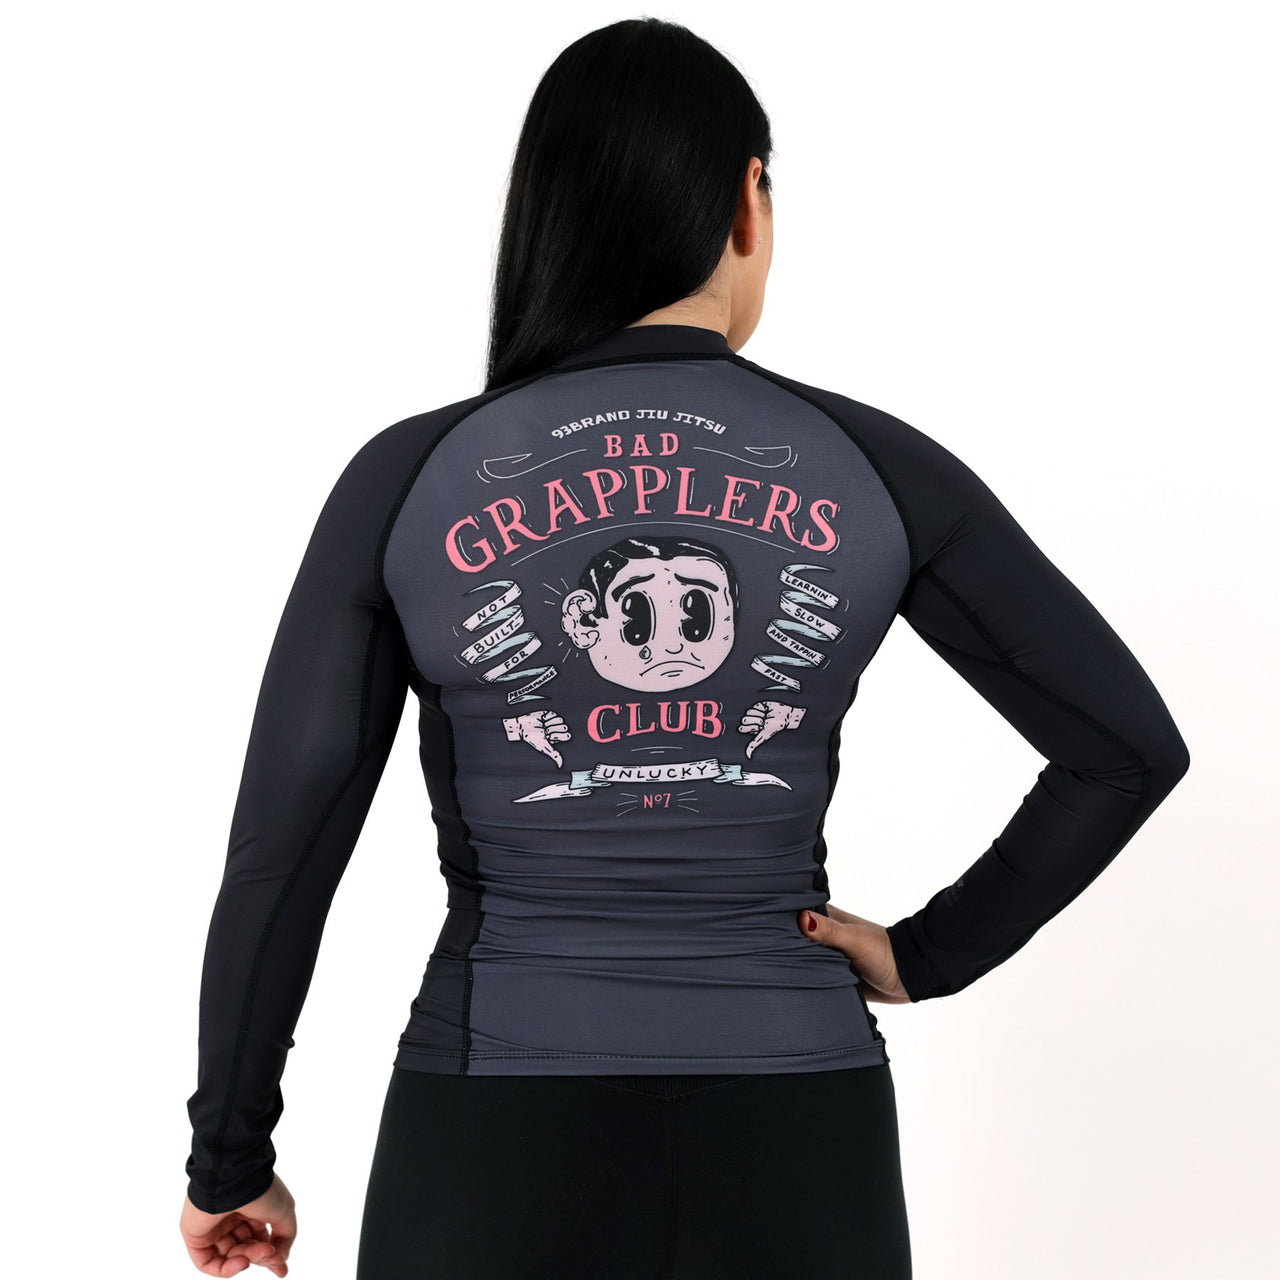 93brand "Bad Grapplers Club" Women's Rash Guard - Long Sleeve (Black)